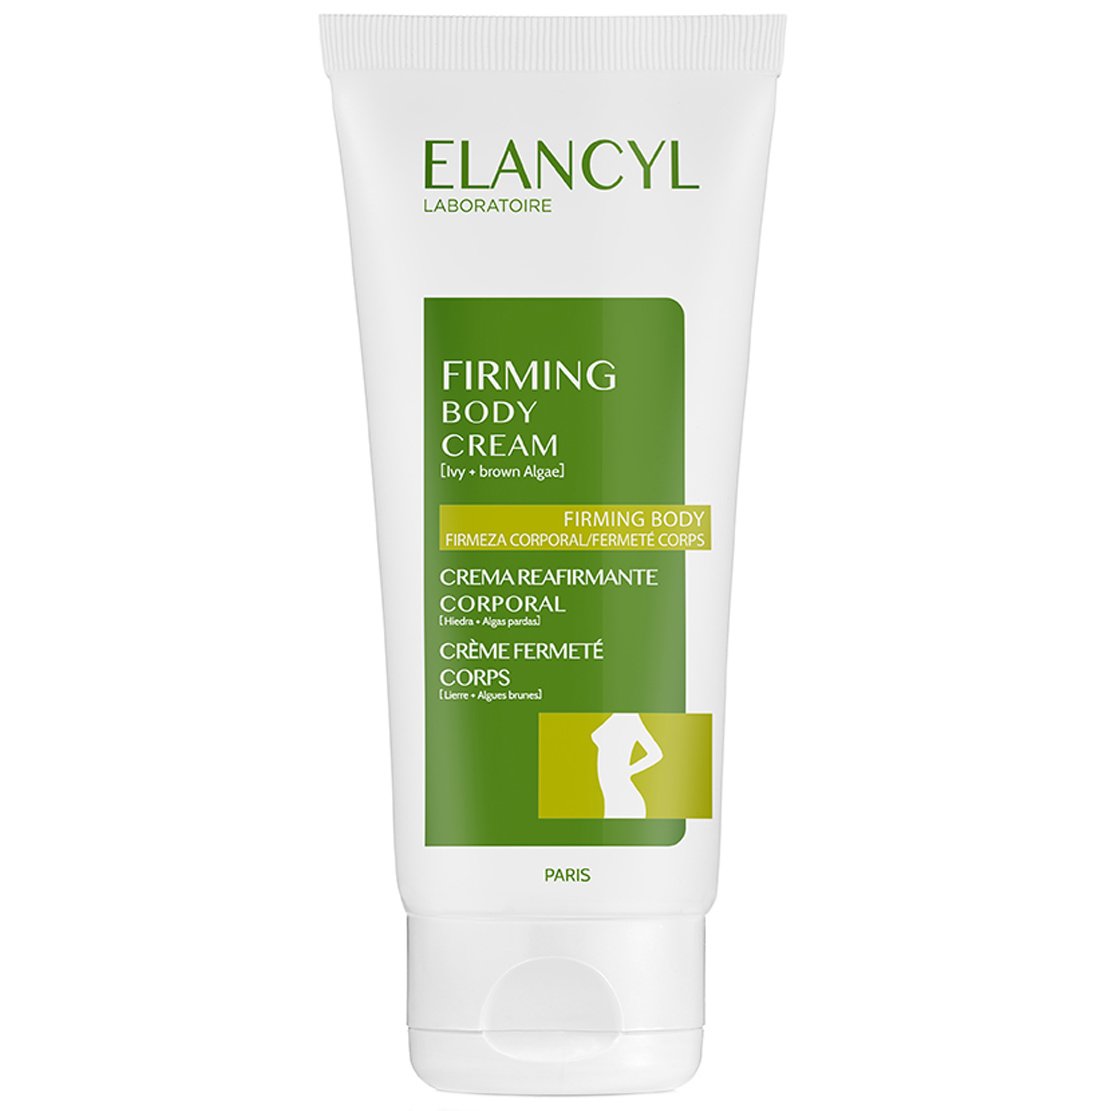 Elancyl Firming Body Cream Resculpting Action & Firms Skin Κρέμα Σώματος για Σύσφιξη & Αναδόμηση του Δέρματος 200ml 4247